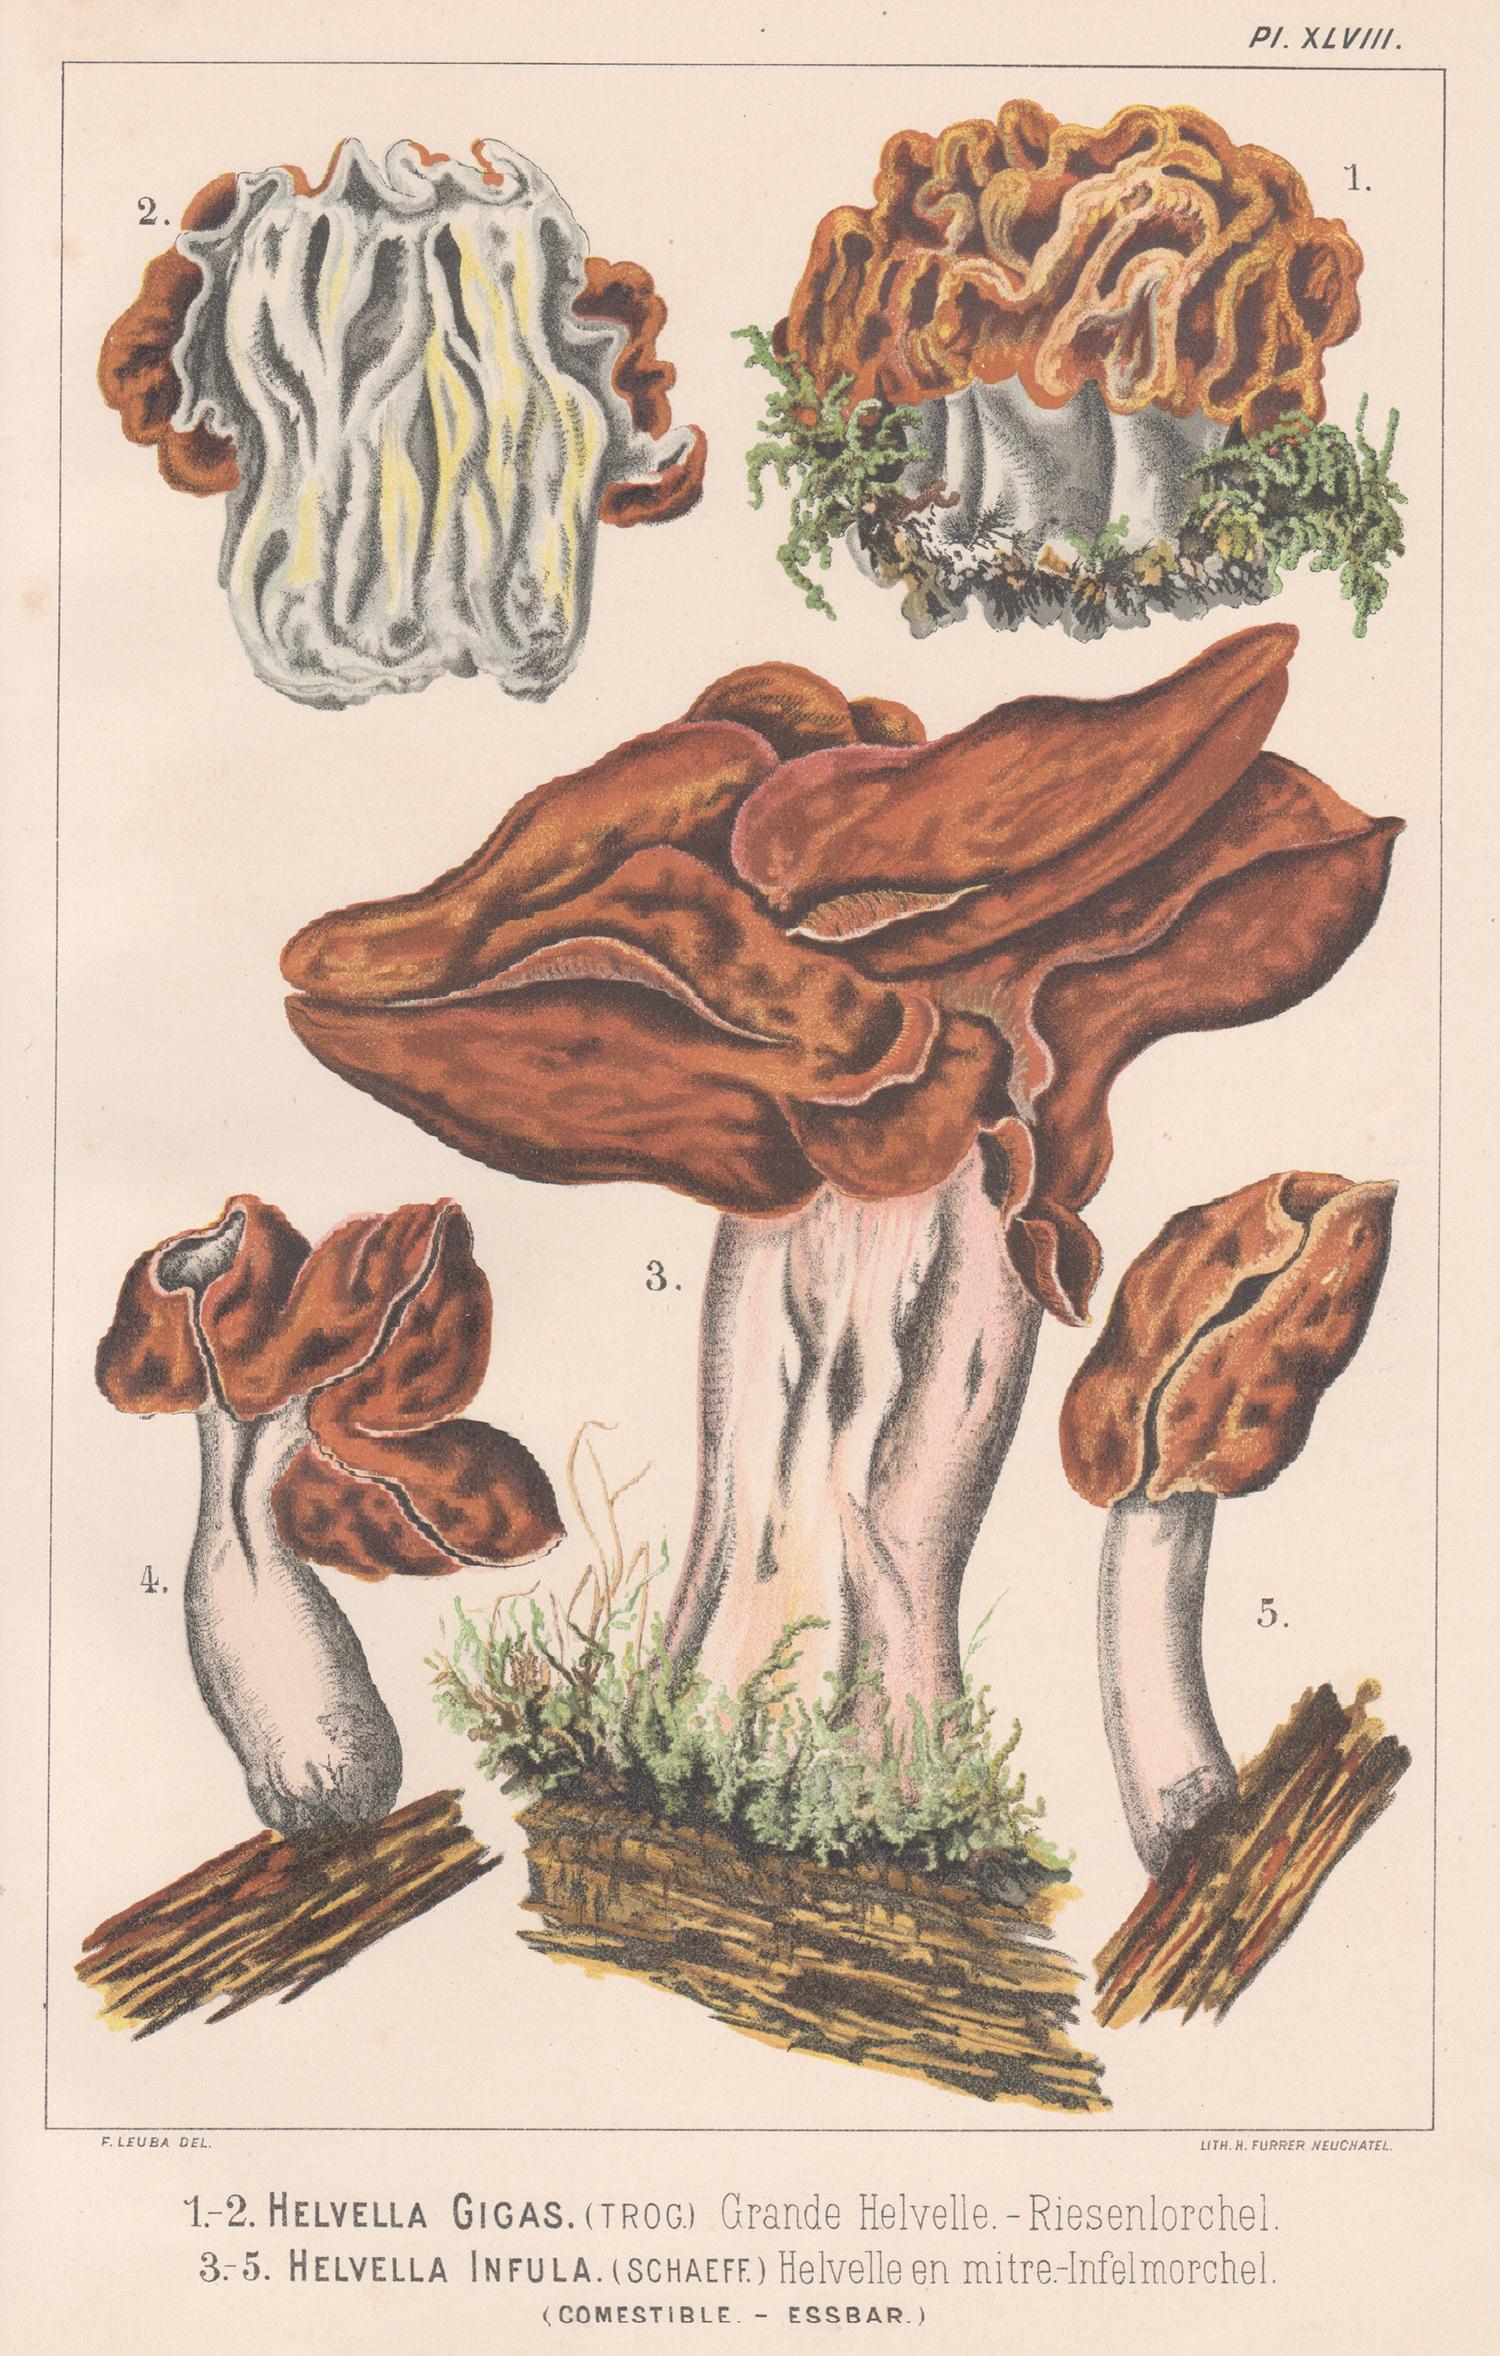 H Furrer after Fritz Leuba Print - Helvella Gigas / Infula, Leuba antique mushroom fungi chromolithograph print